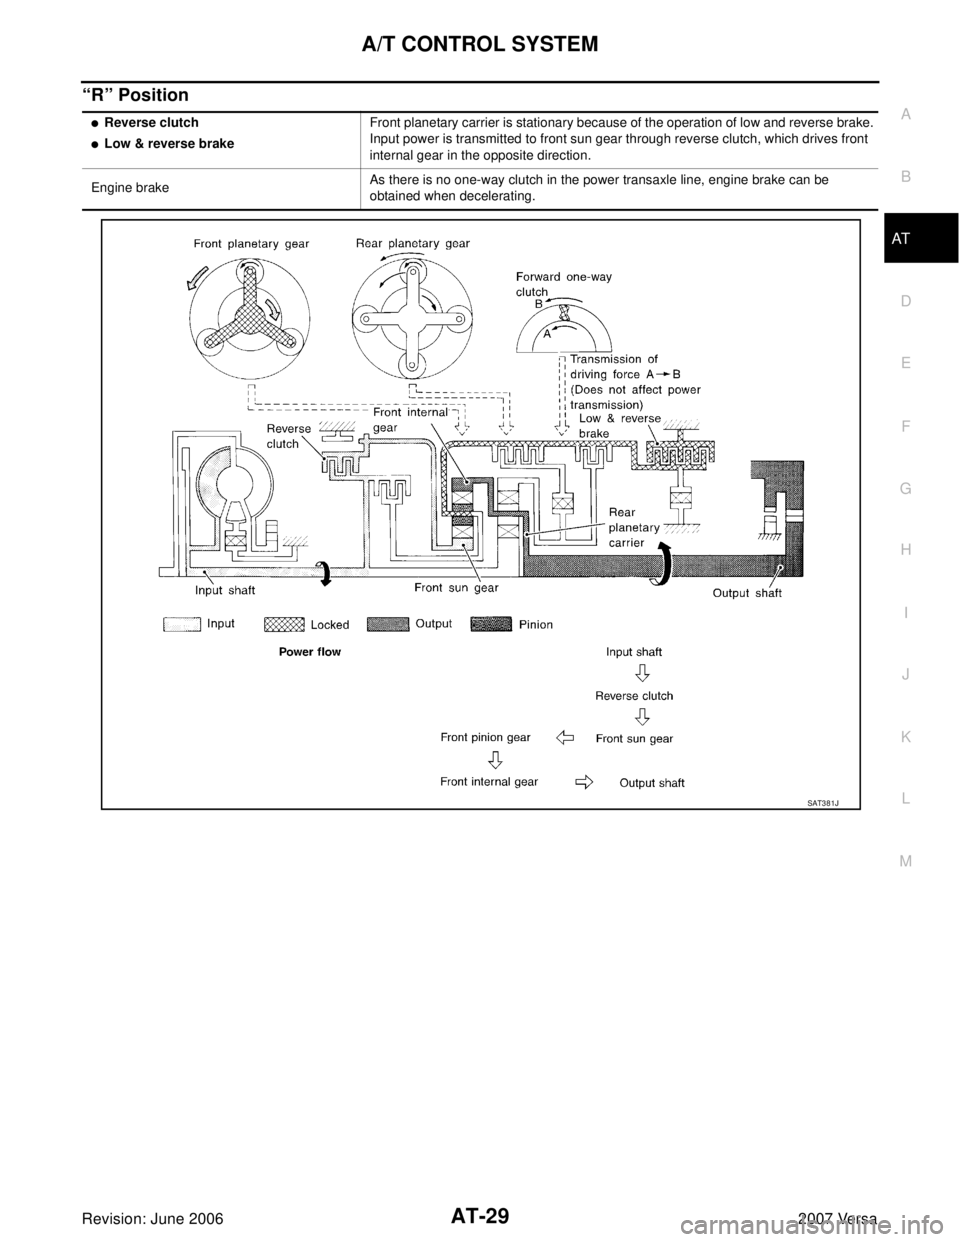 NISSAN TIIDA 2007  Service Service Manual A/T CONTROL SYSTEM
AT-29
D
E
F
G
H
I
J
K
L
MA
B
AT
Revision: June 20062007 Versa
“R” Position
Reverse clutch
Low & reverse brakeFront planetary carrier is stationary because of the operation of 